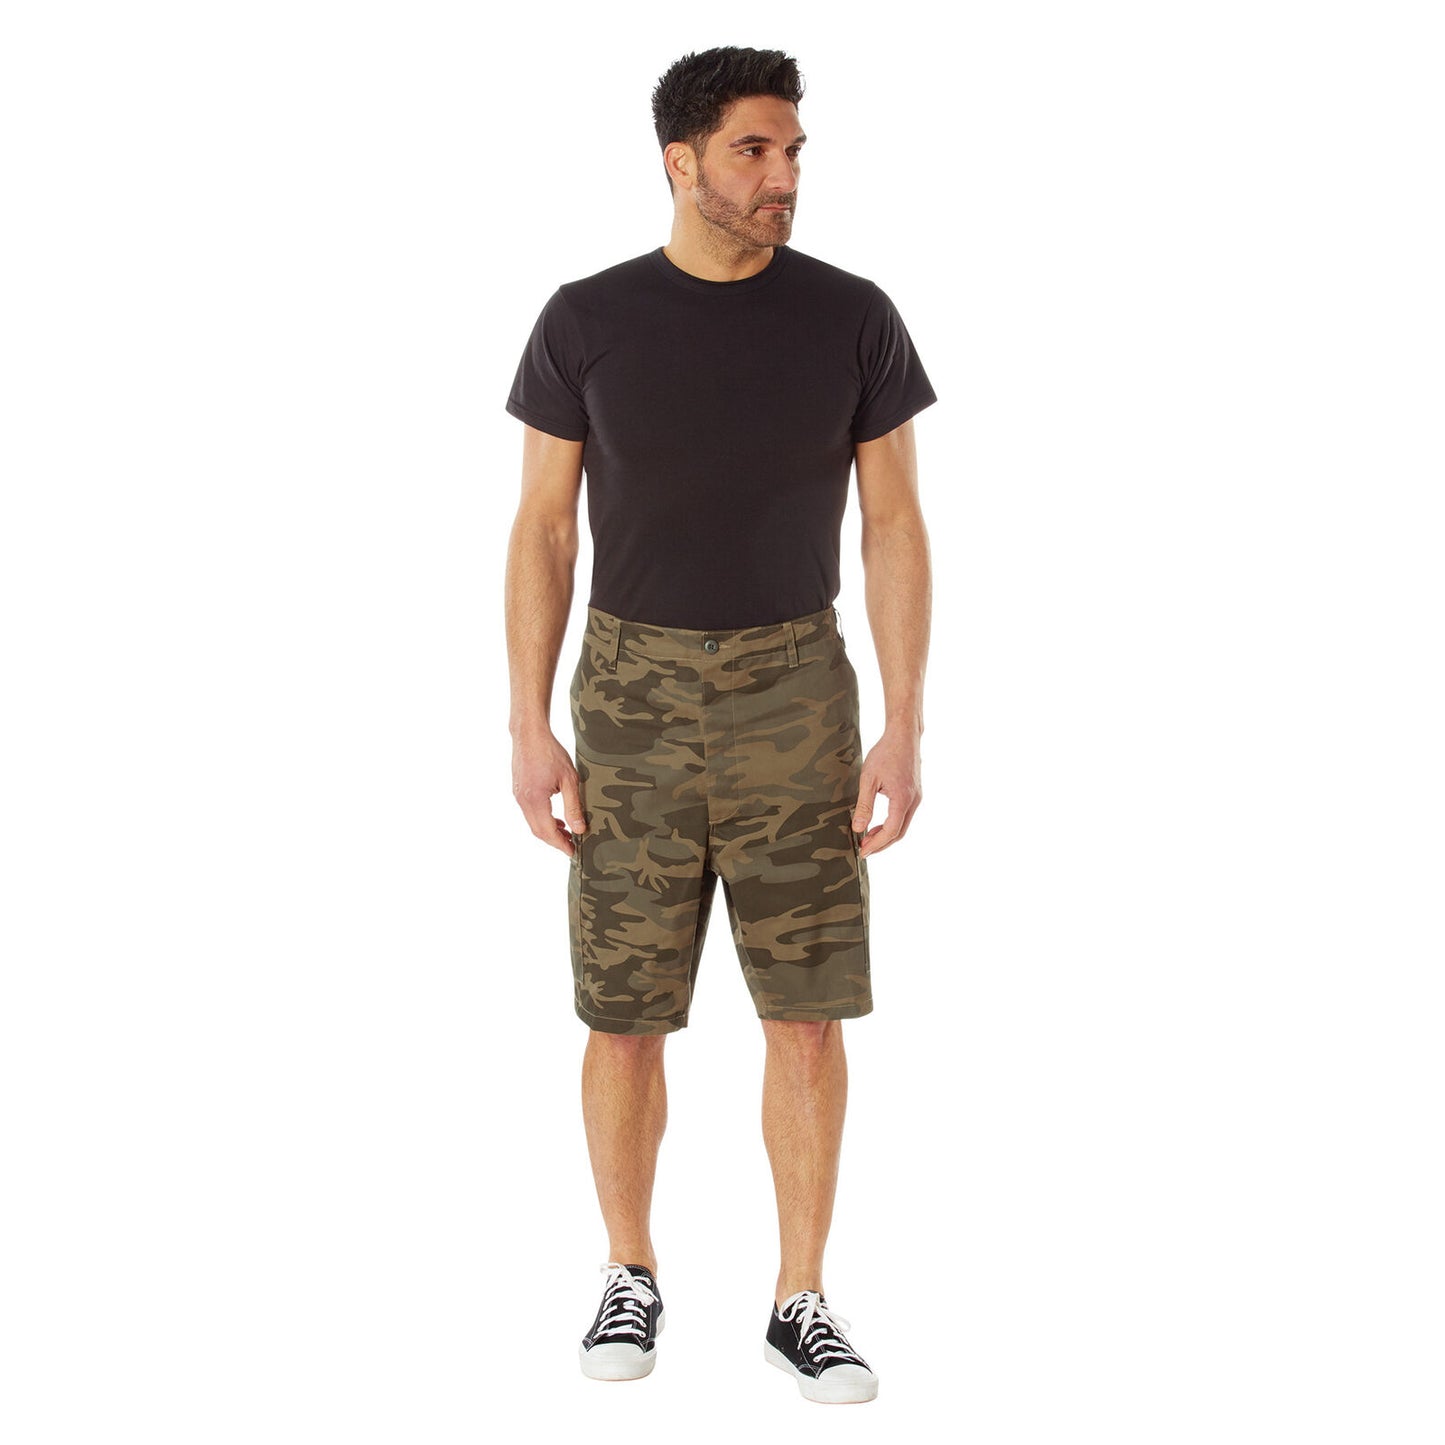 Men's Coyote Camo BDU Shorts - Cotton and Polyester Tactical Cargo Shorts